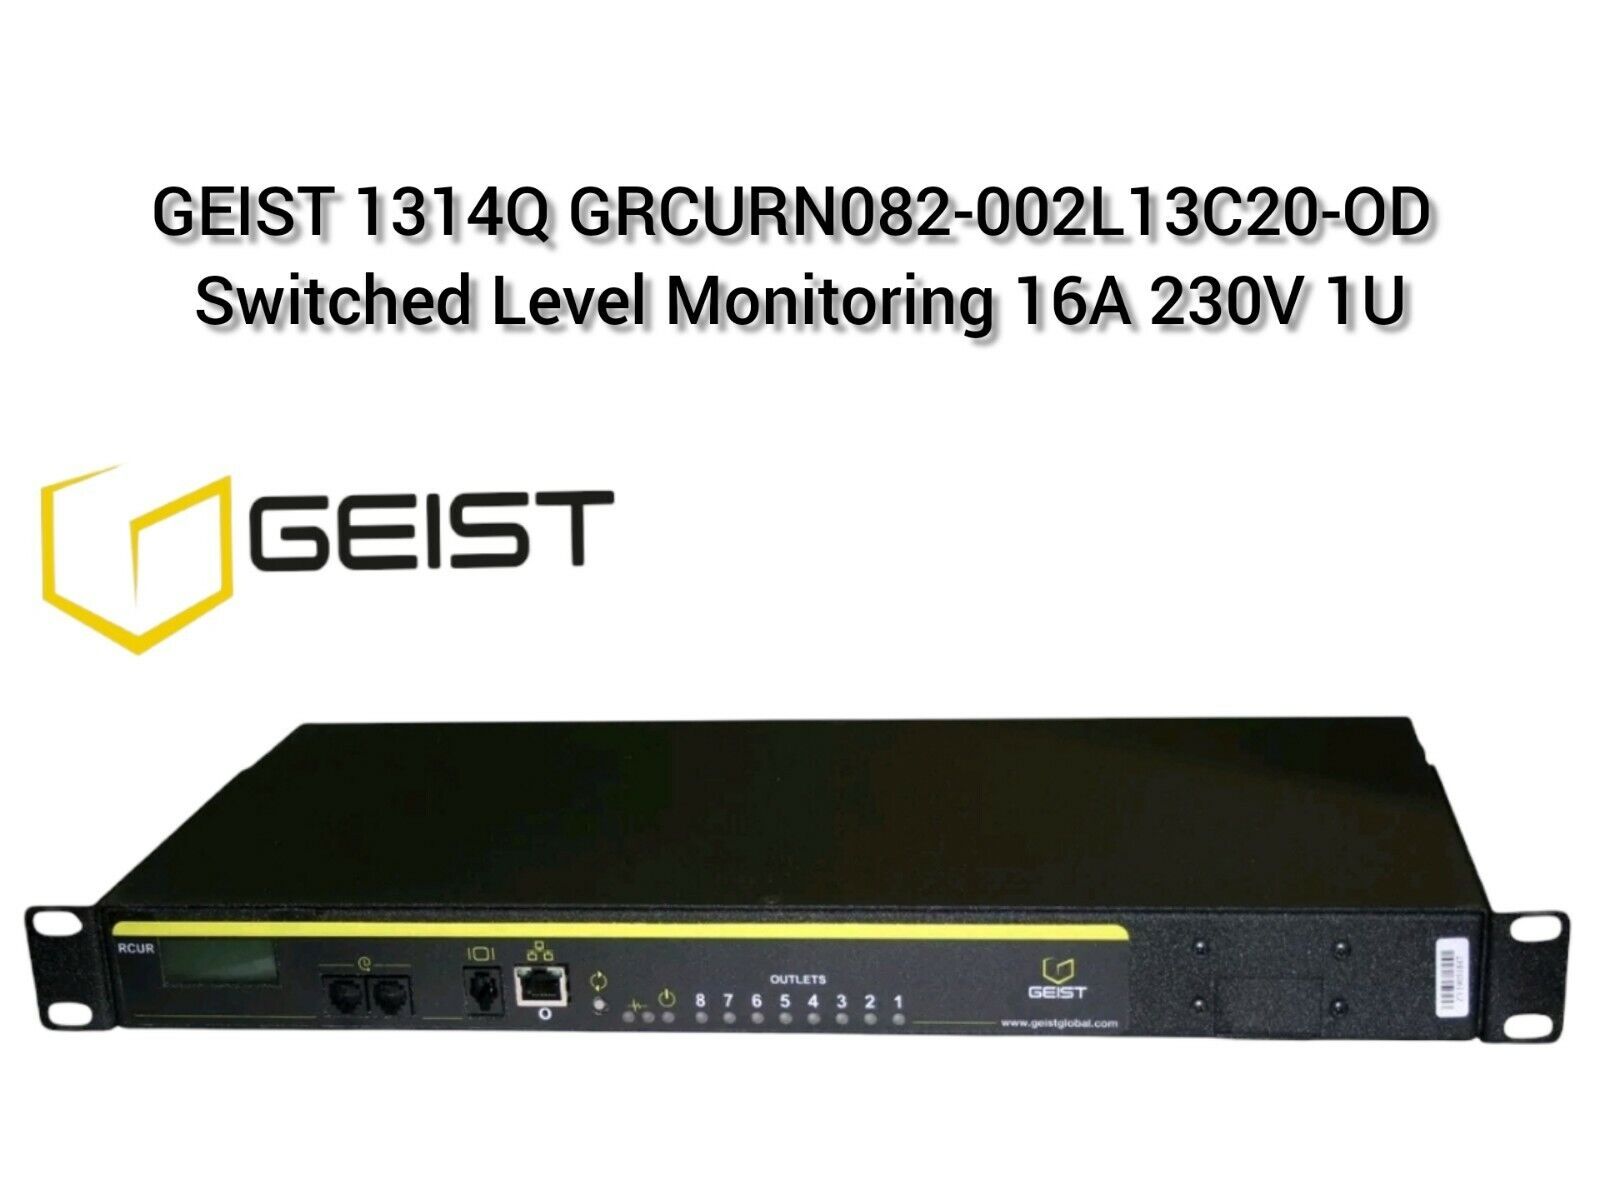 NEW VERTIV GEIST G1314Q Switched Level Monitoring 16A 230V 1U